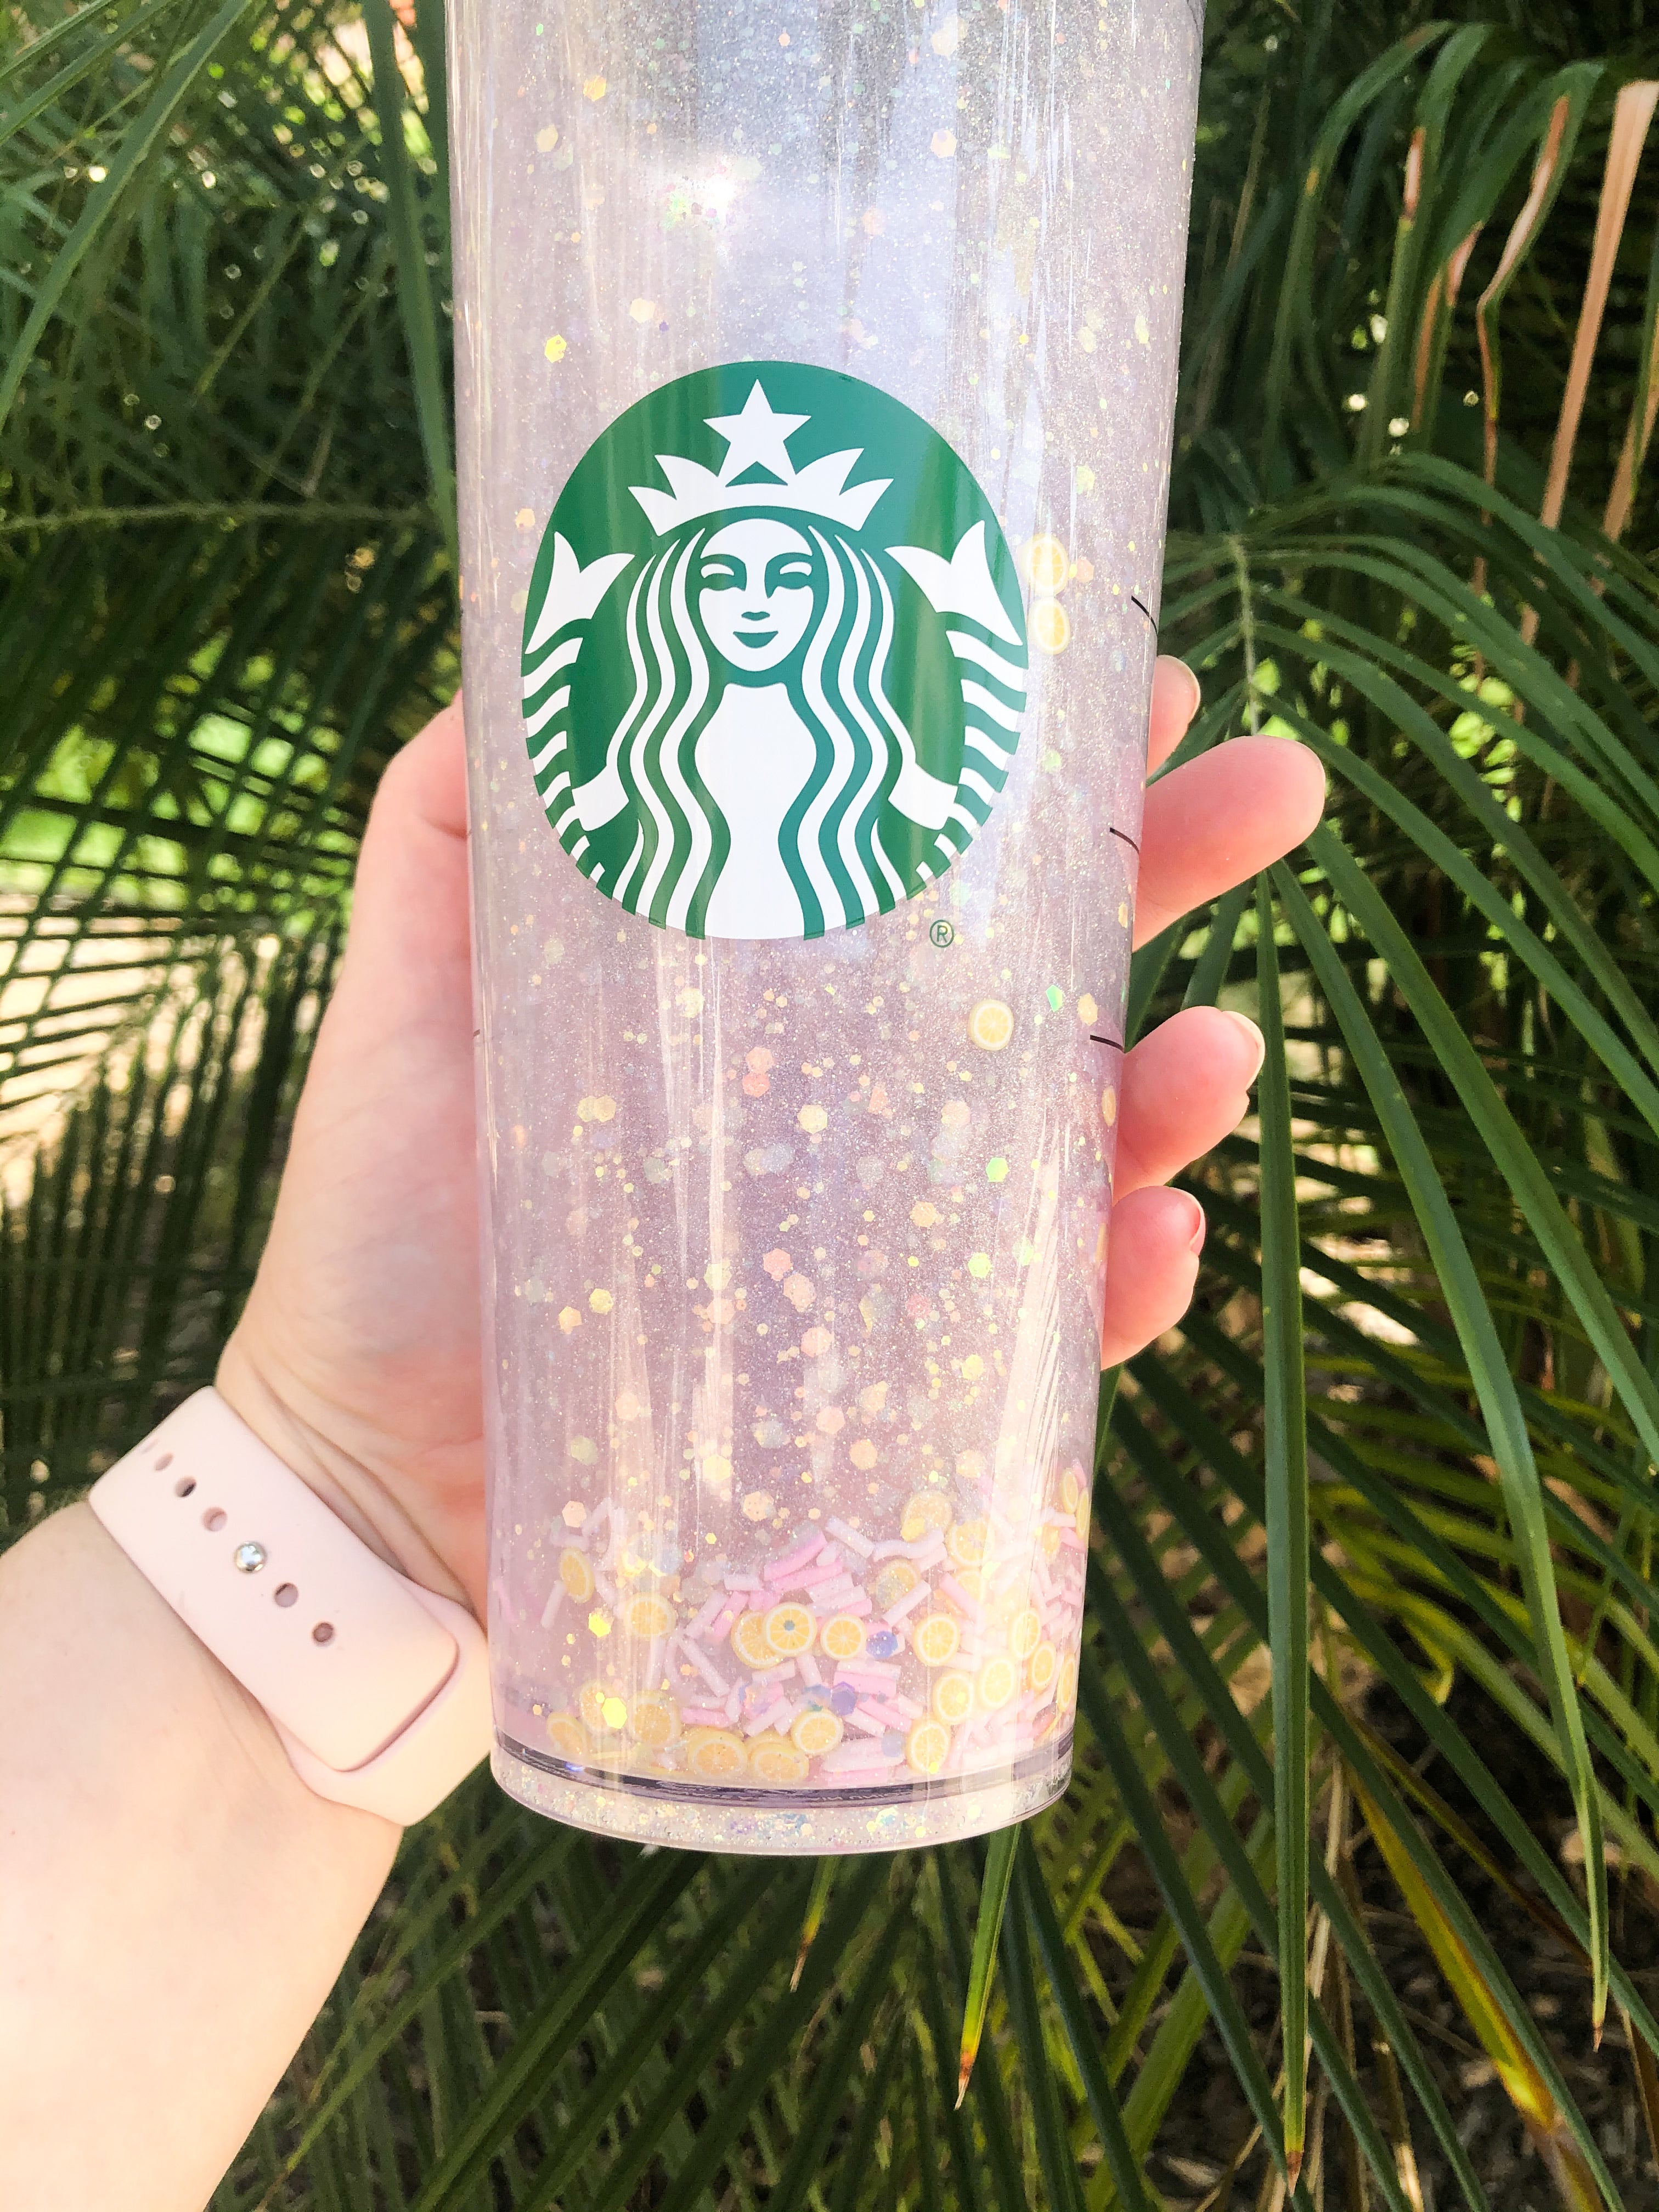 Starbucks Personalized Glitter Tumbler 